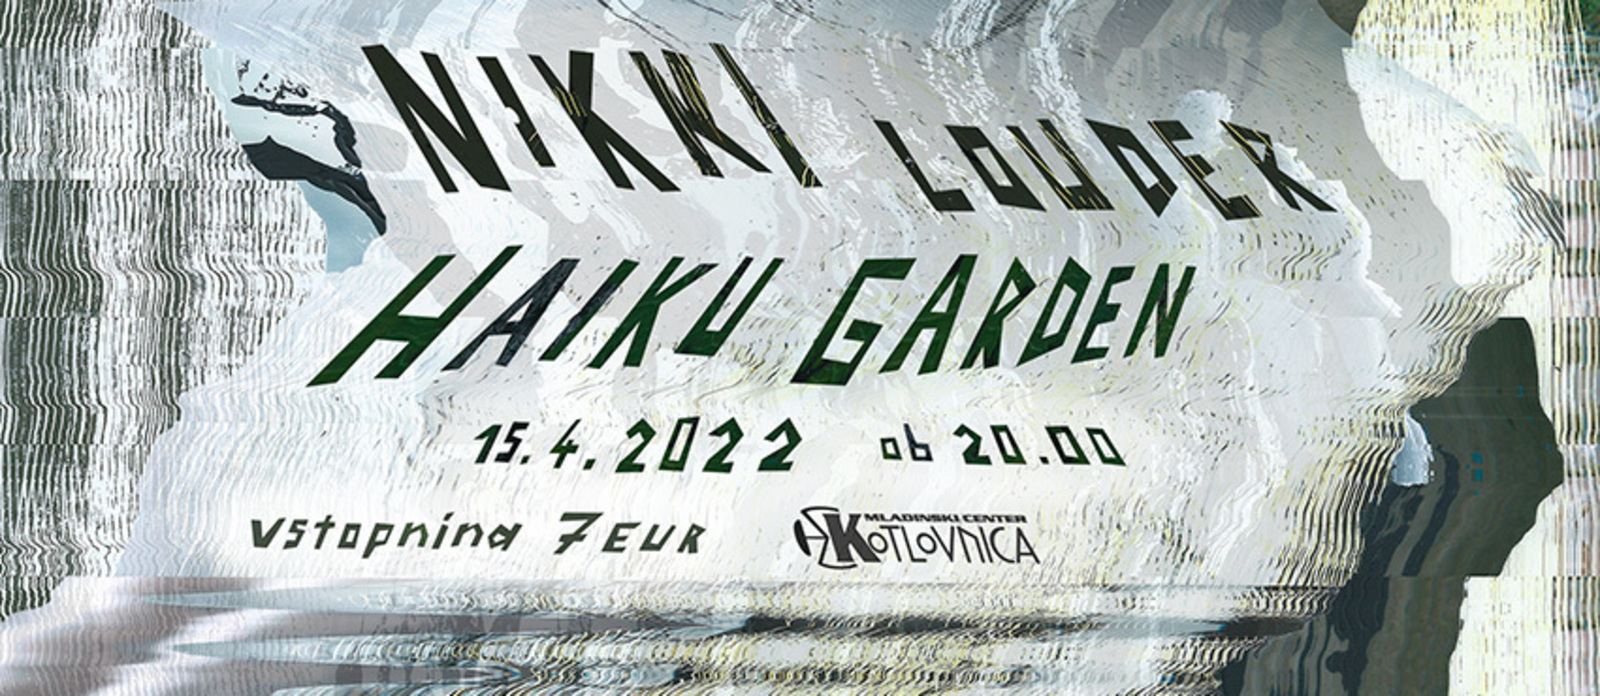 Koncert: Haiku Garden in Nikki Louder